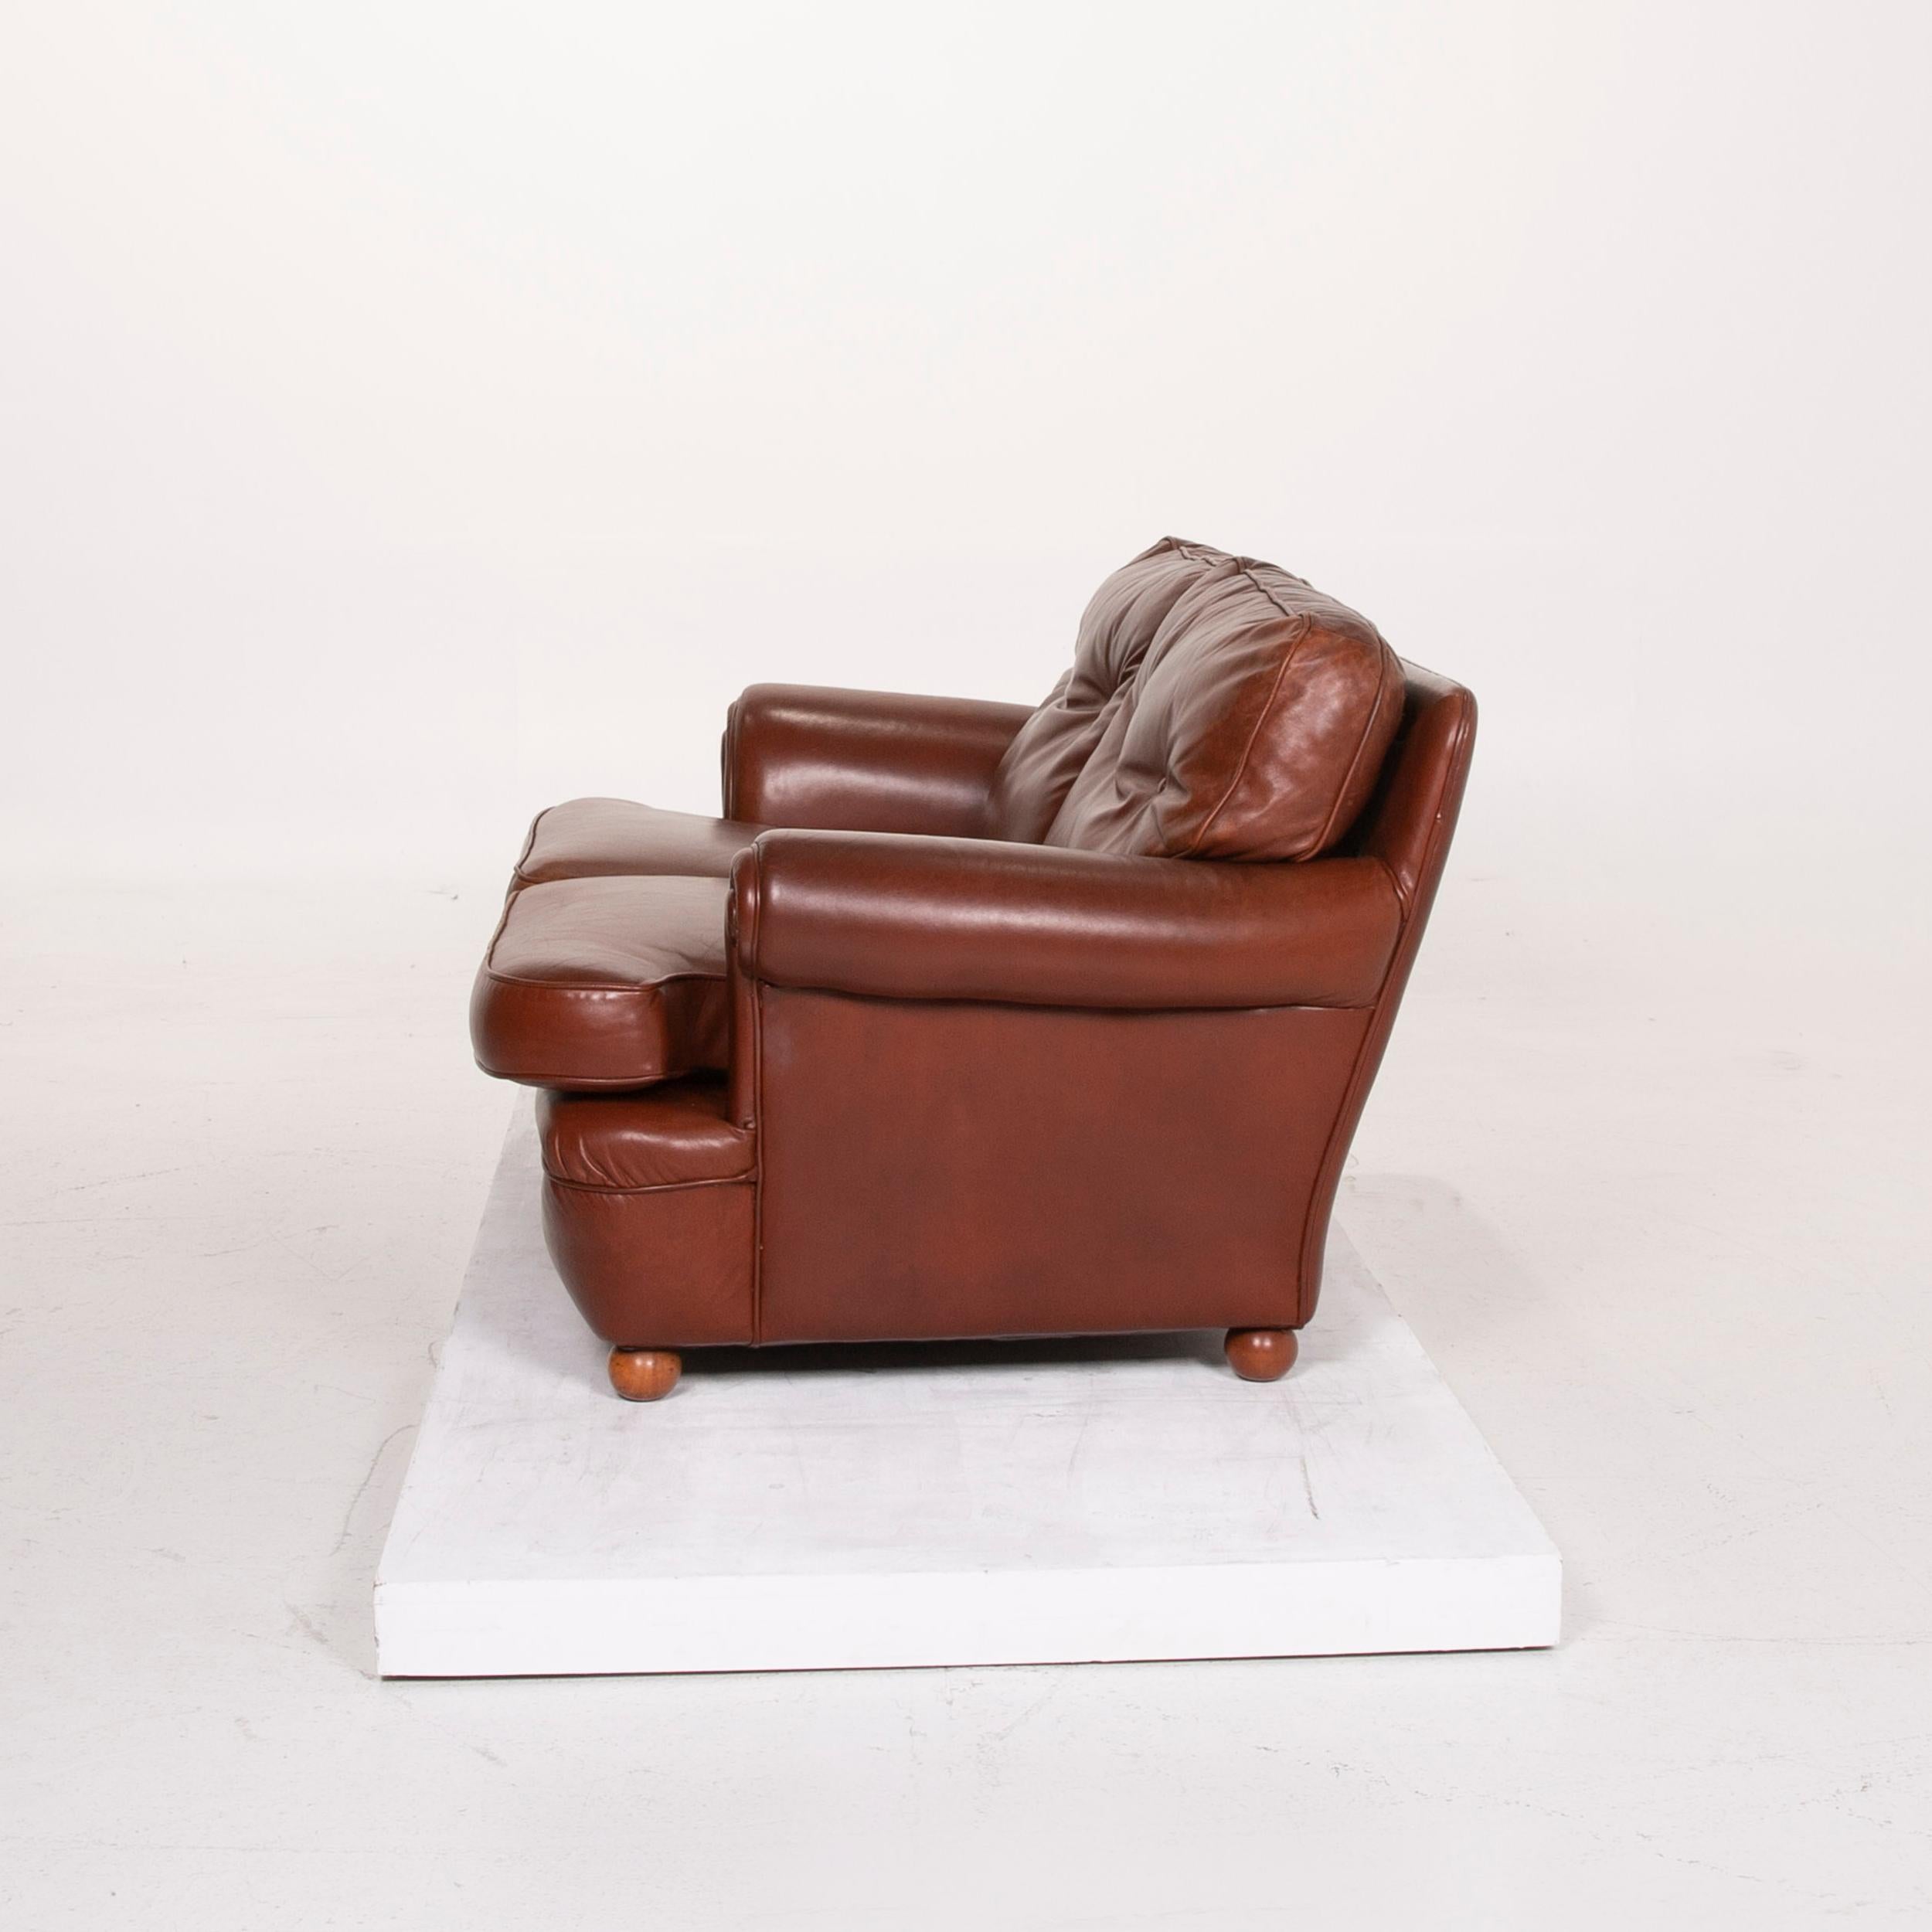 Poltrona Frau Leather Sofa Cognac Two-Seat 4